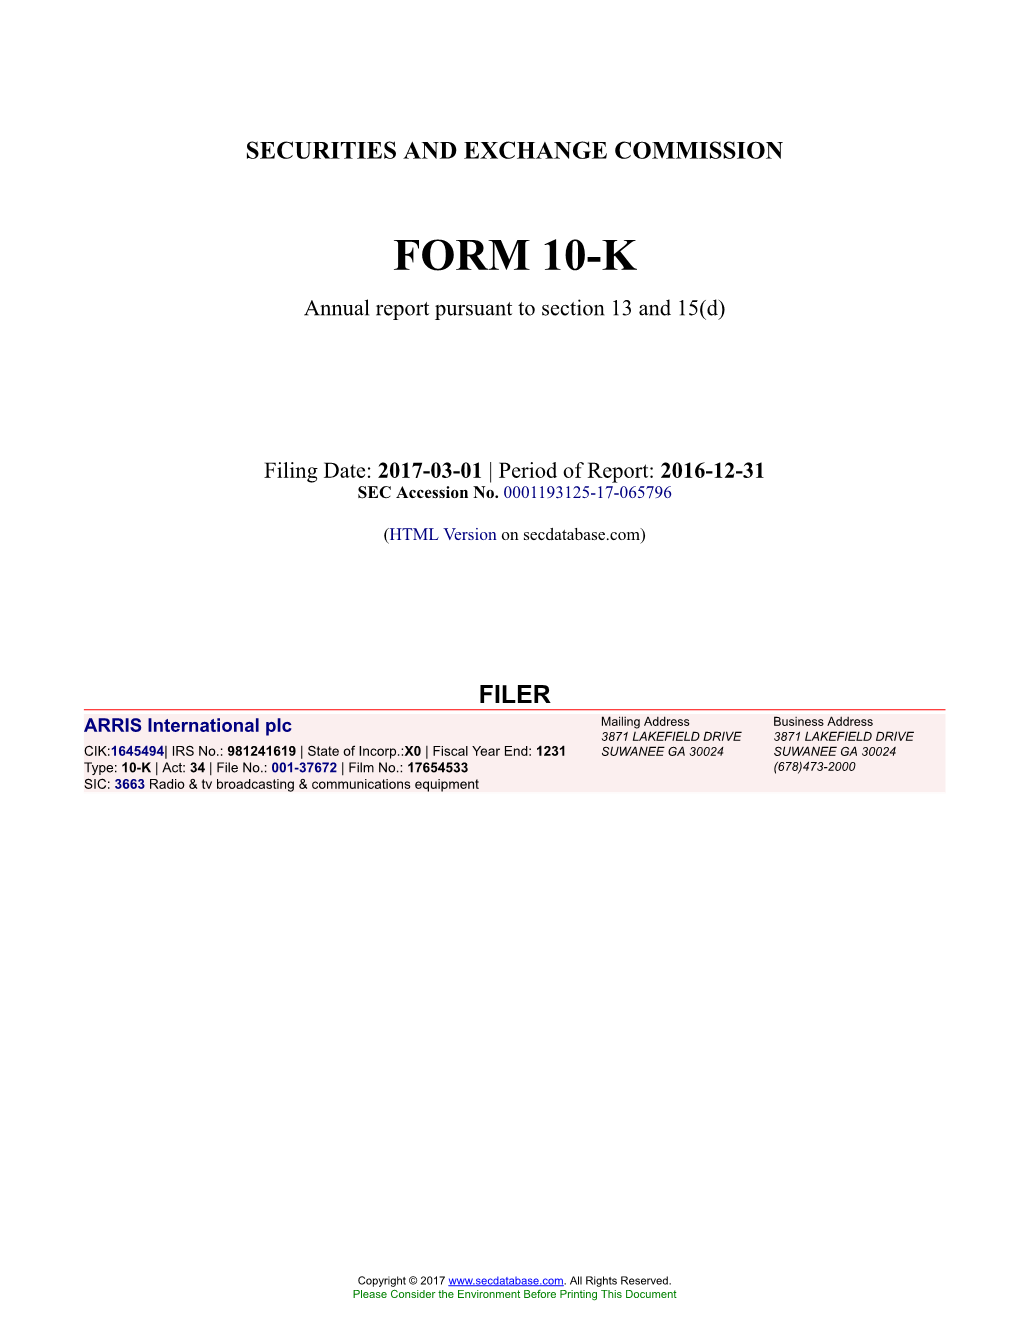 ARRIS International Plc Form 10-K Annual Report Filed 2017-03-01